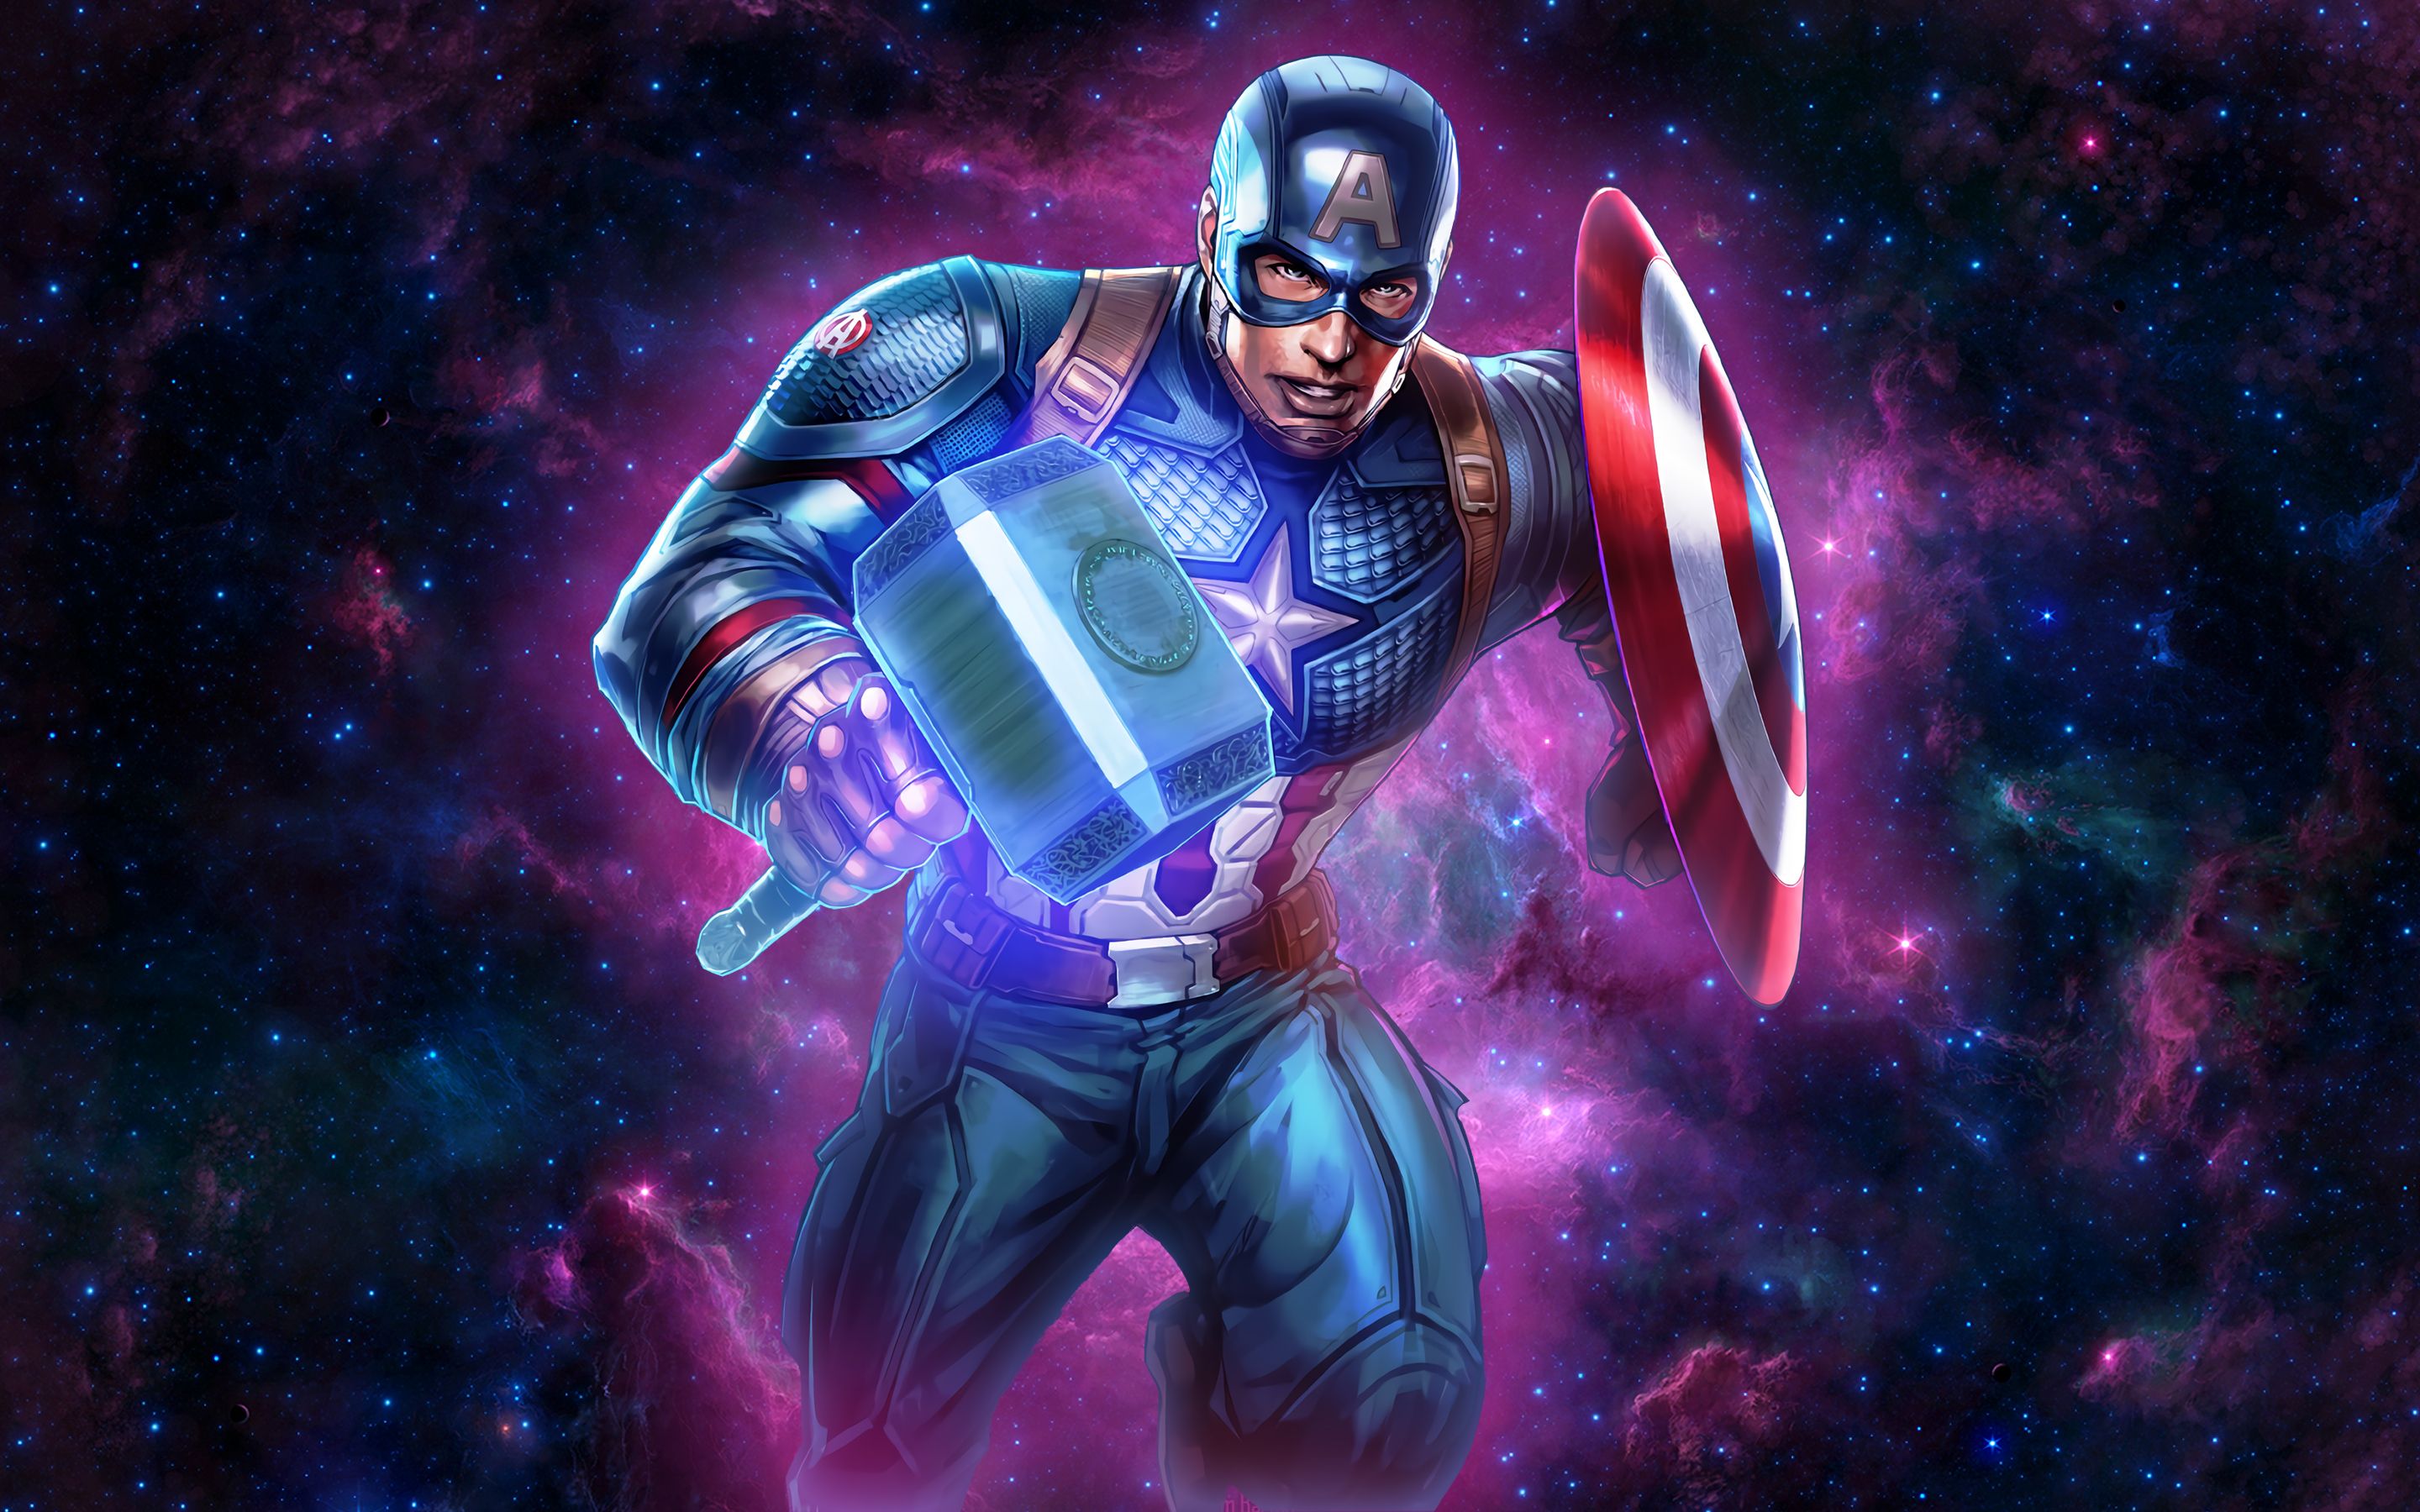 THE RONALDO TOUR on Twitter Captain America feat Mjolnir wallpaper   Avengers End Game  endgame Wallpaper httpstco0WFQAXuxCz  Twitter